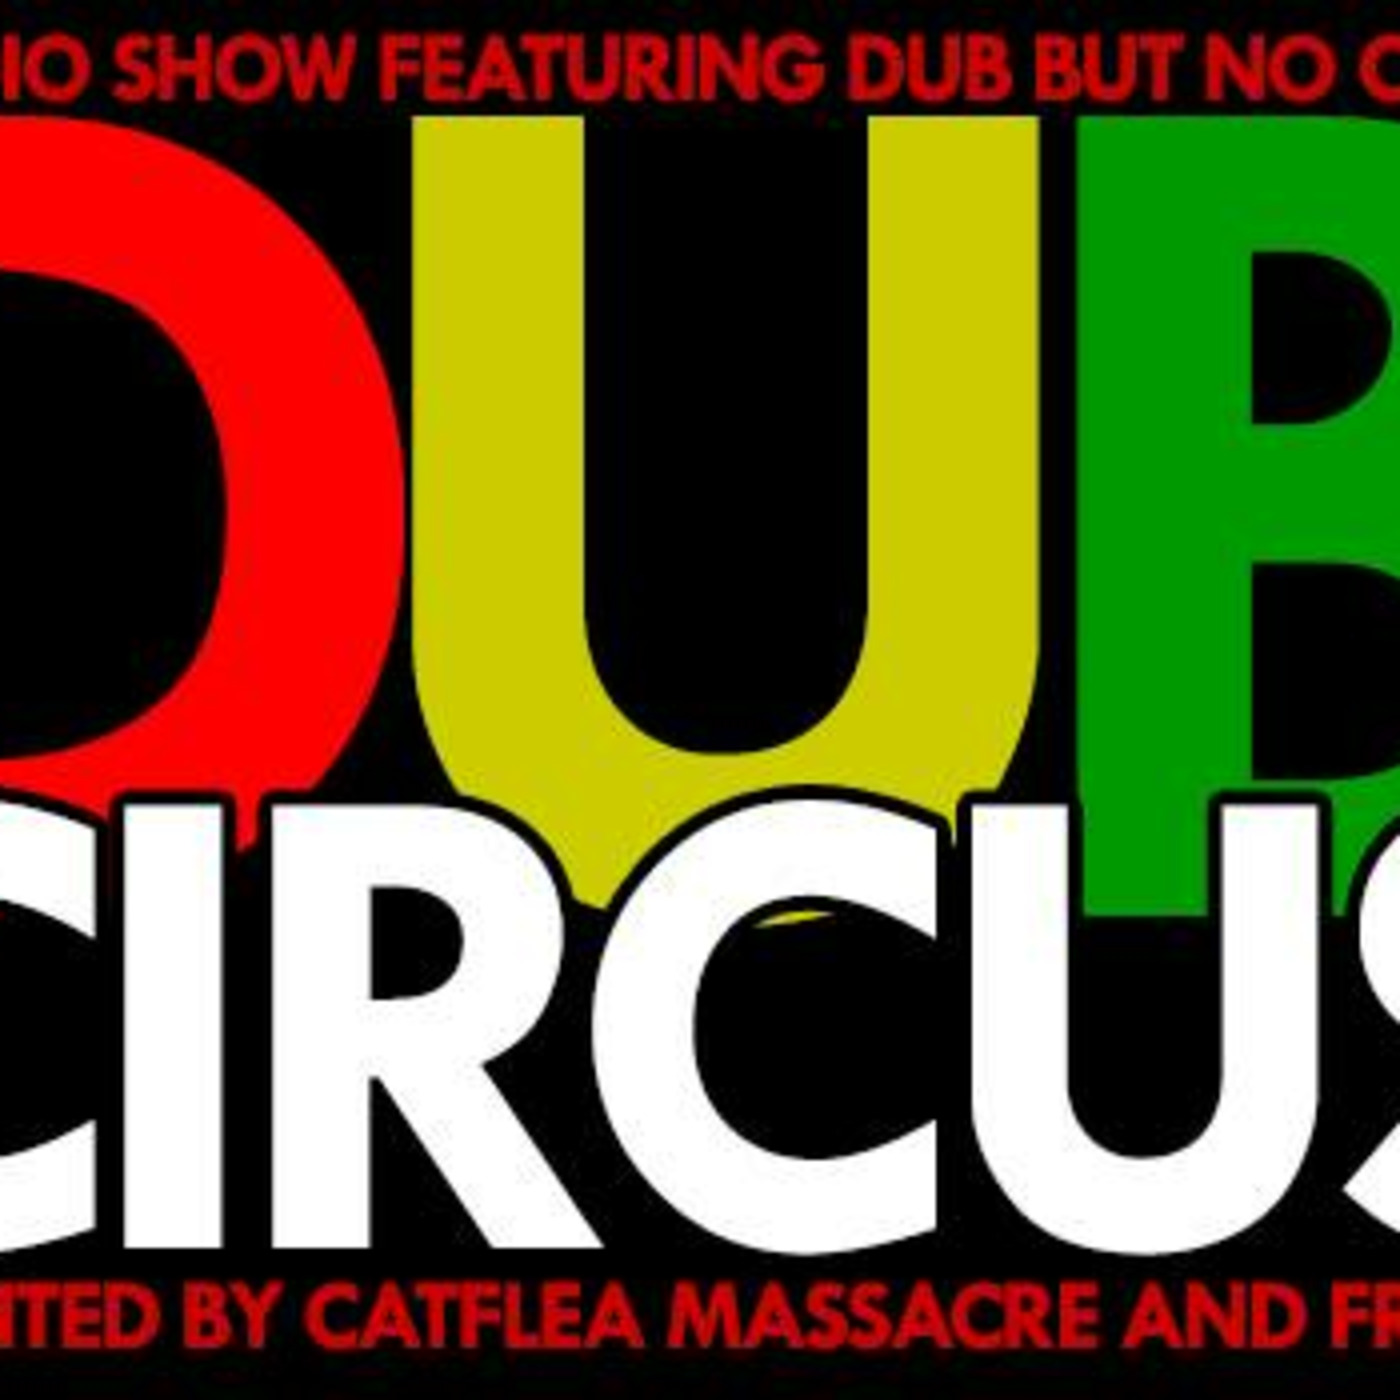 Episode 2538: Dub Circus Show 55 On bootboyradio.net